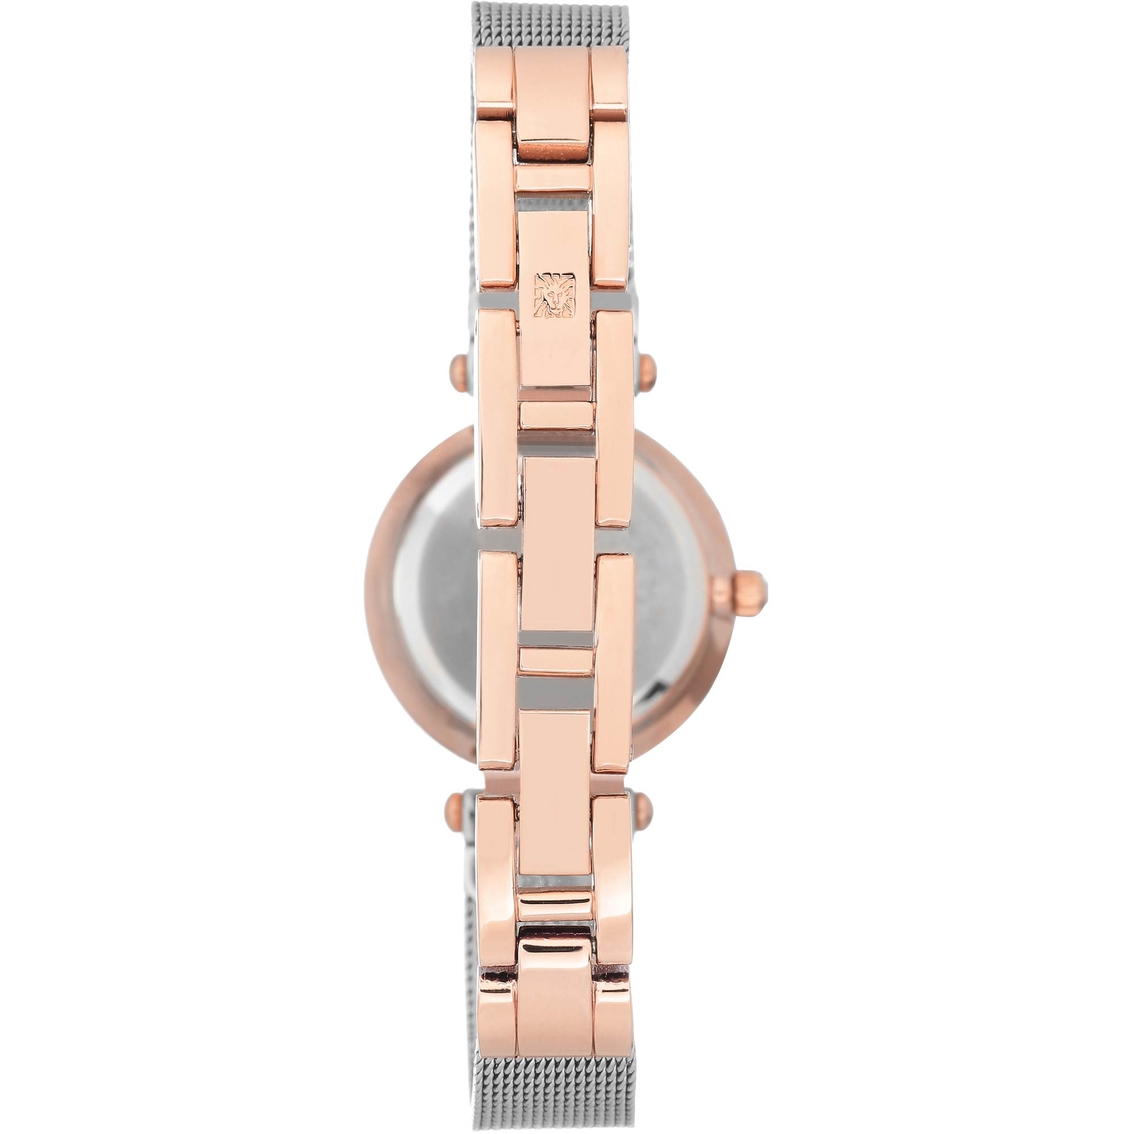 Anne Klein Women's Diamond Accented Two-tone Mesh Bracelet Watch AK/3003SVRT - Image 2 of 3